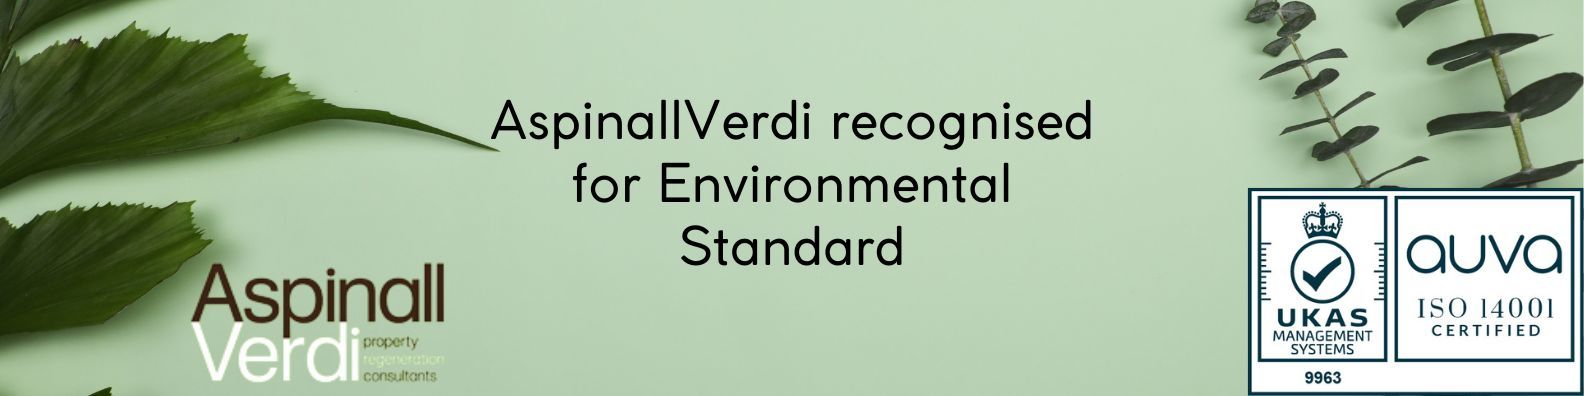 AspinallVerdi Recognised for Environmental Standard